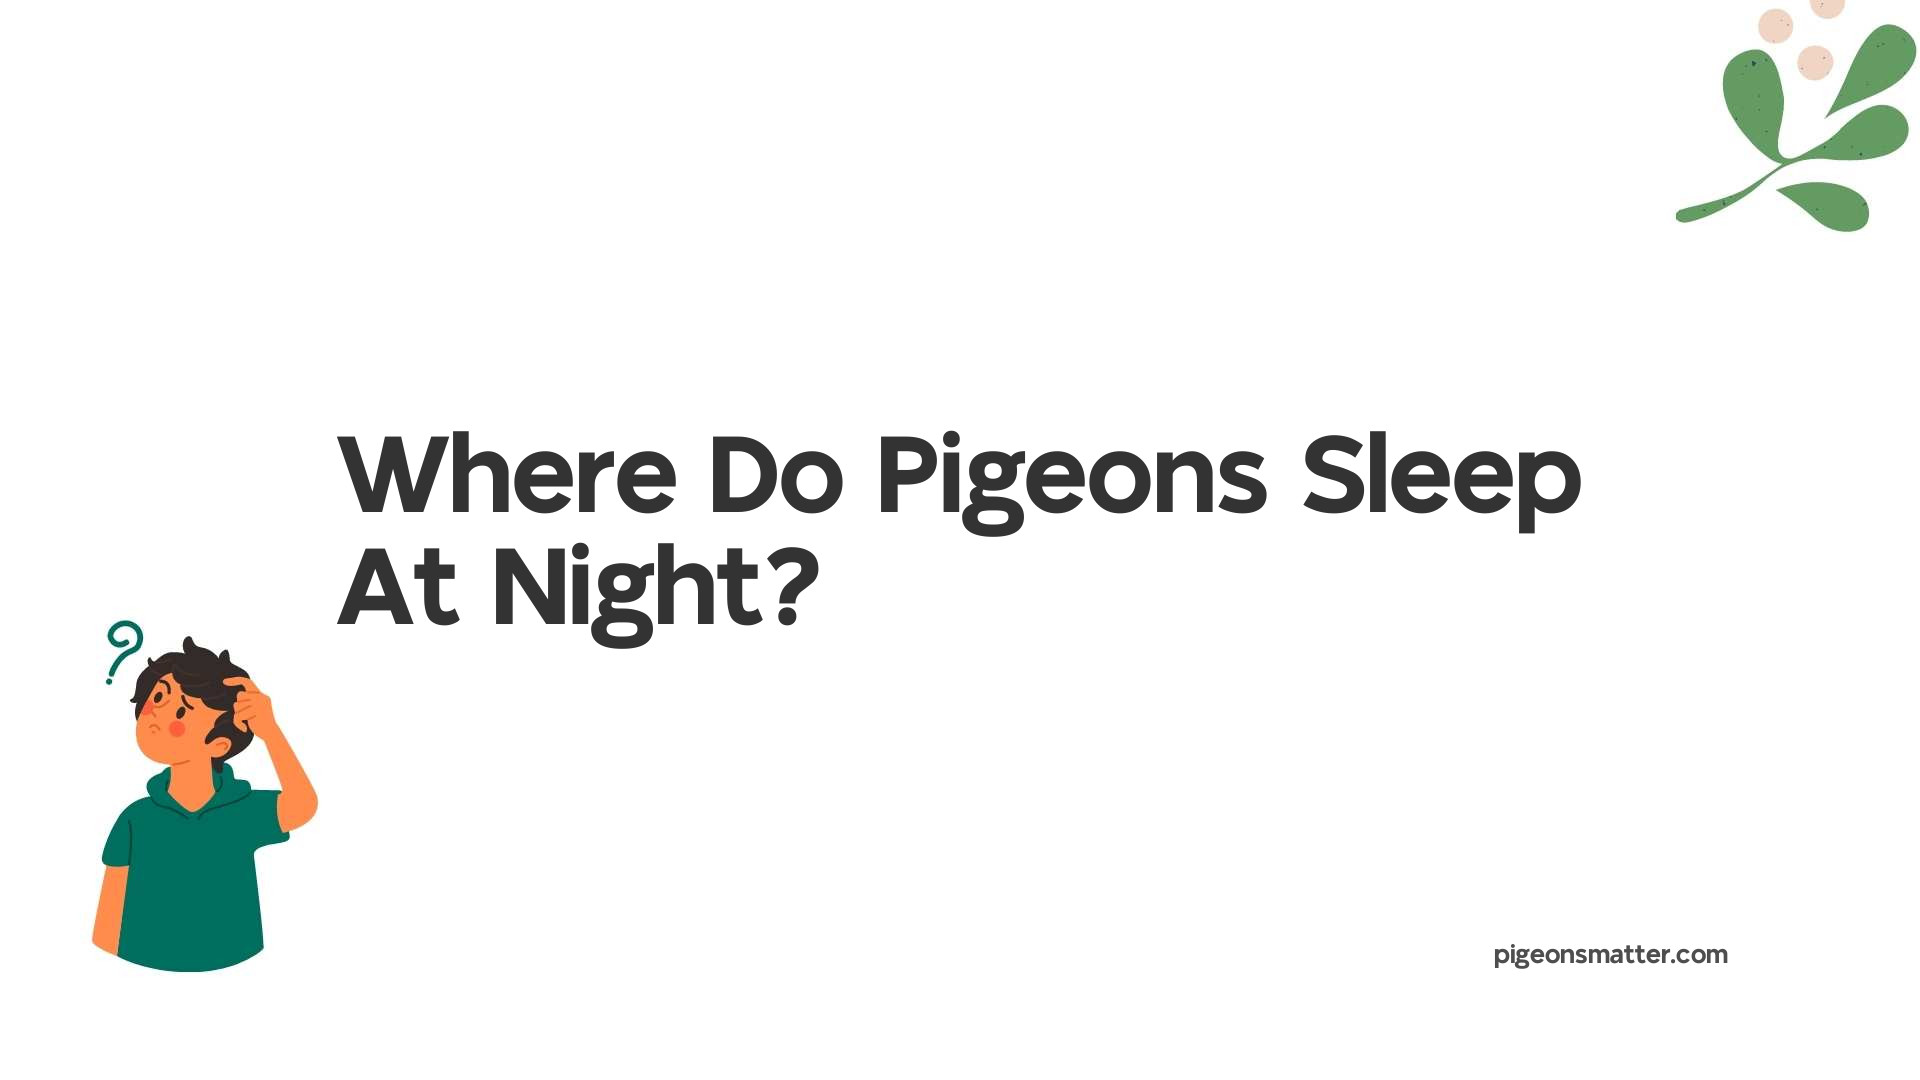 Where Do Pigeons Sleep At Night?